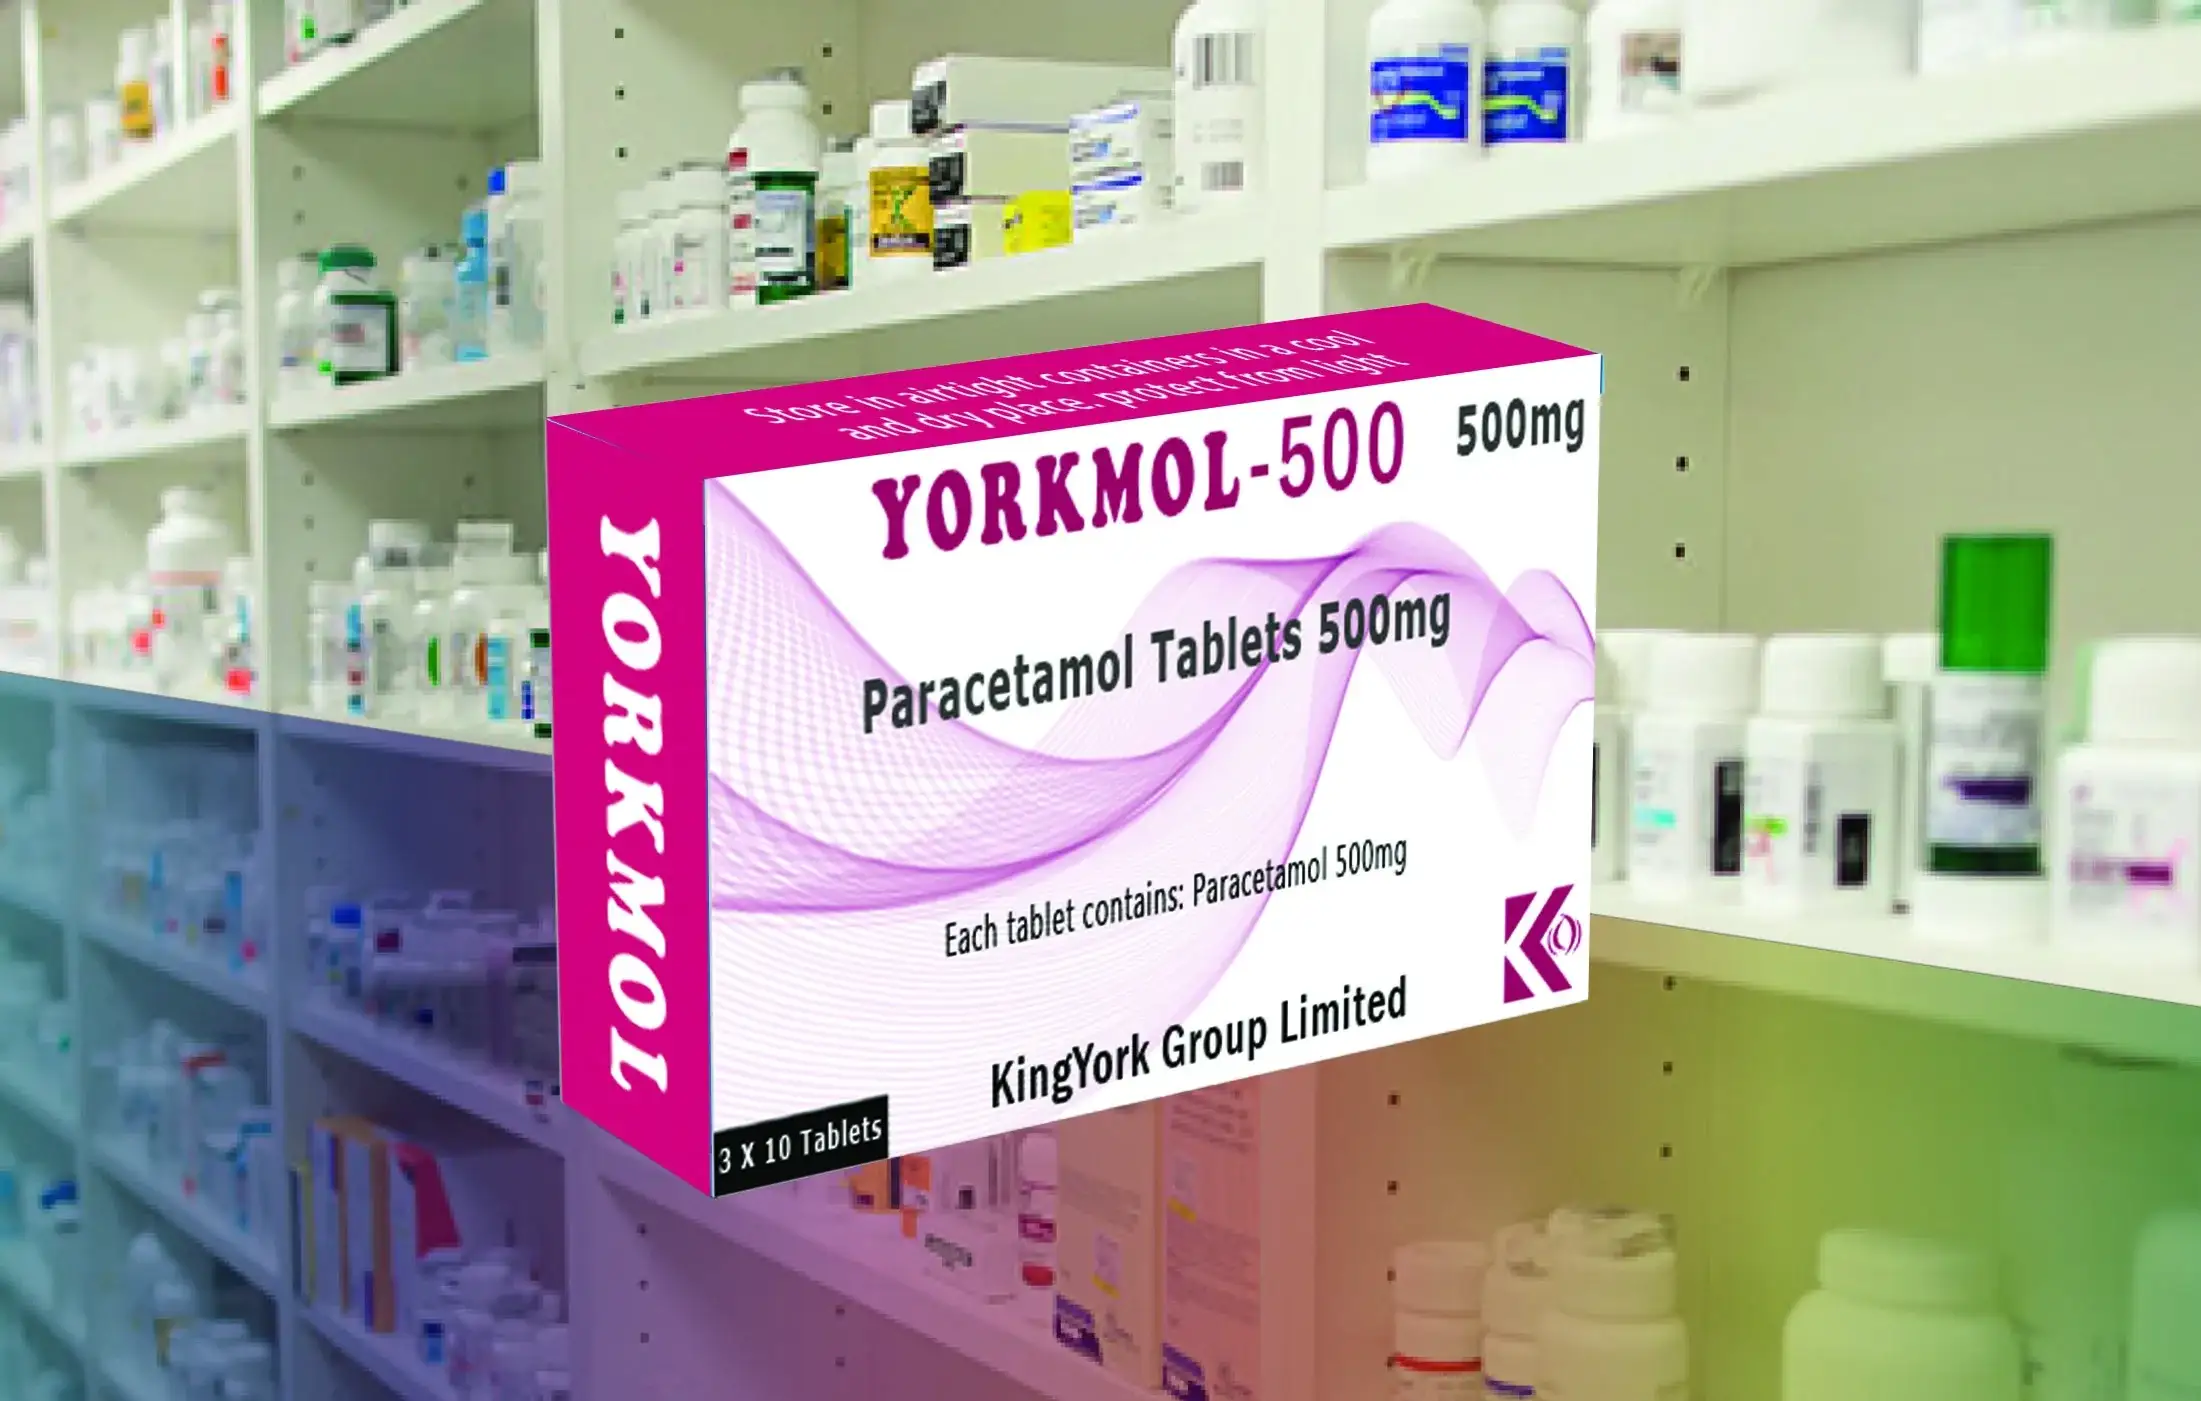 'paracetamol tablets', 'analgesic tablets', 'paracetamol 500mg tablets', 'paracetamol'